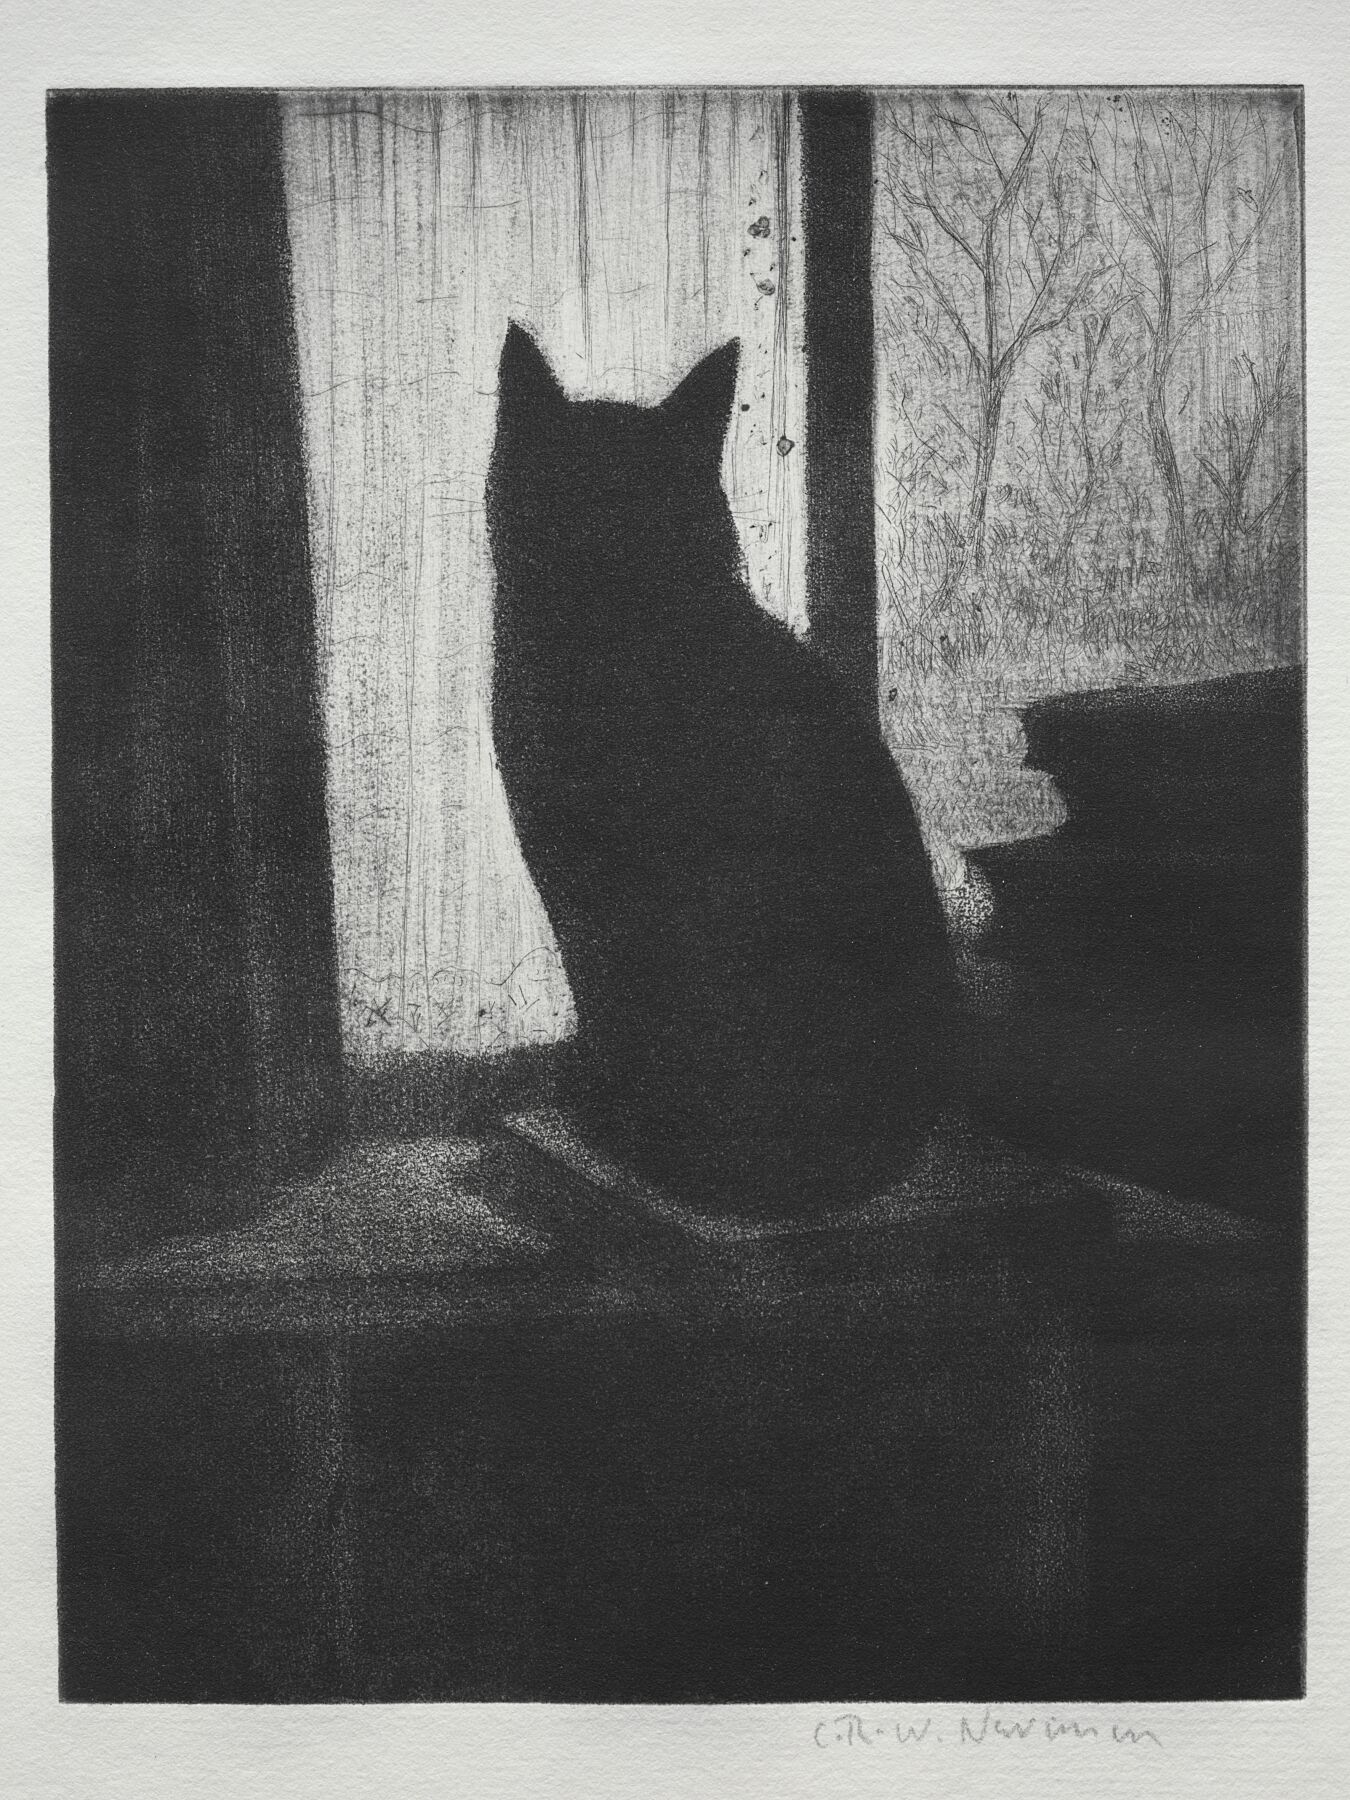 The Black Cat by Christopher Richard Wynne Nevinson - c.1910